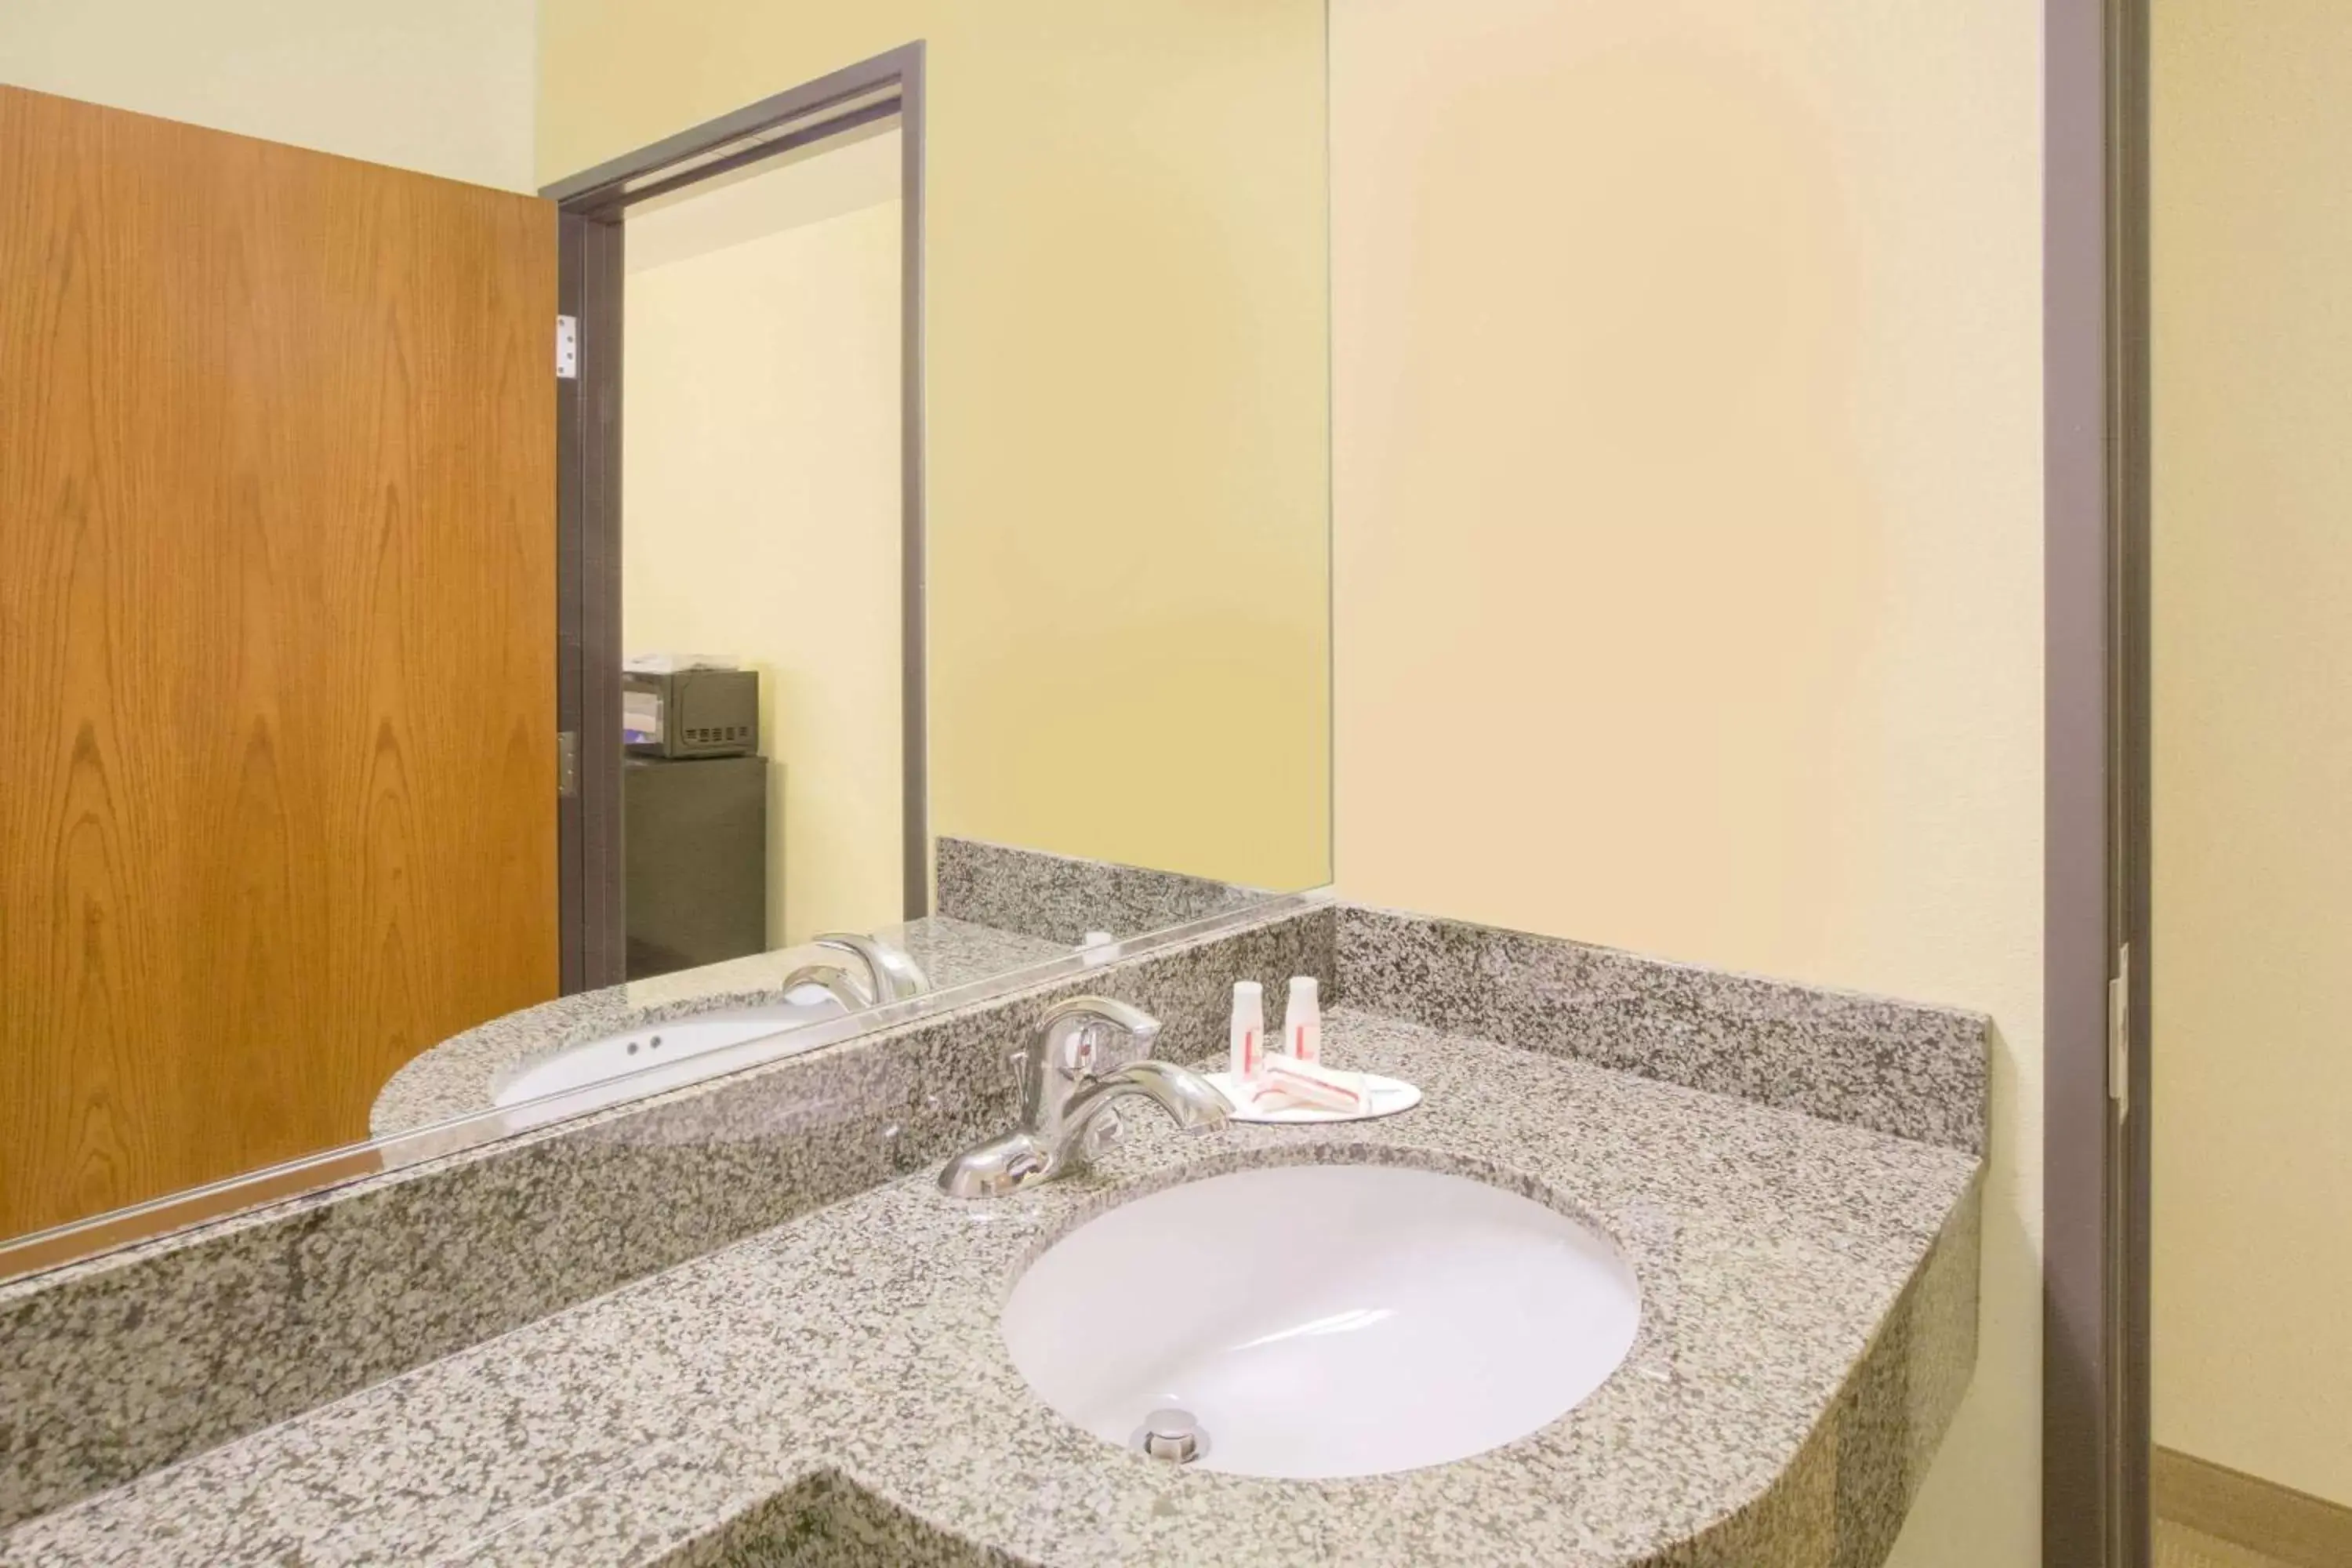 TV and multimedia, Bathroom in Microtel Inn & Suites by Wyndham Delphos